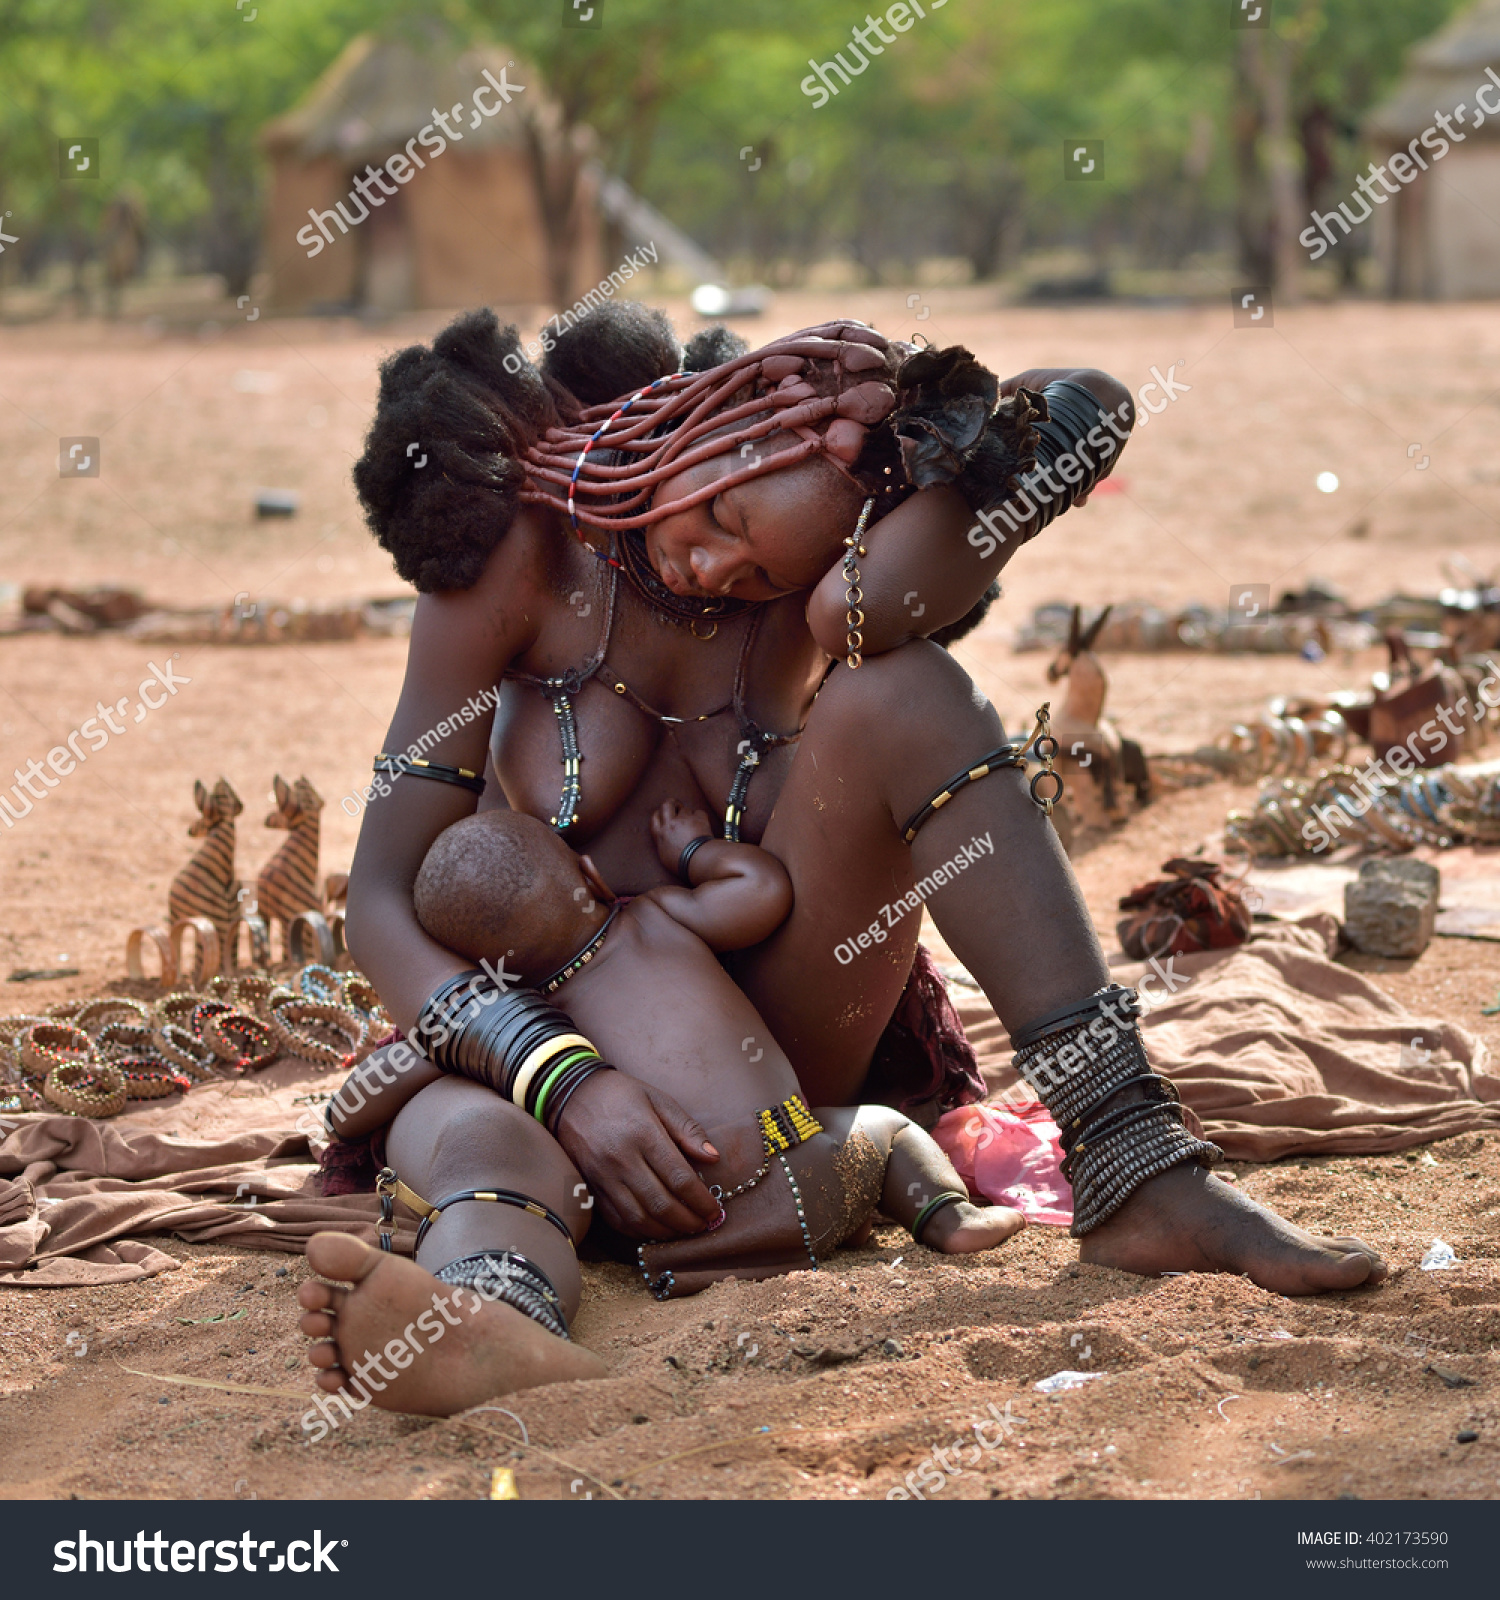 Women namibia nude The Namibian